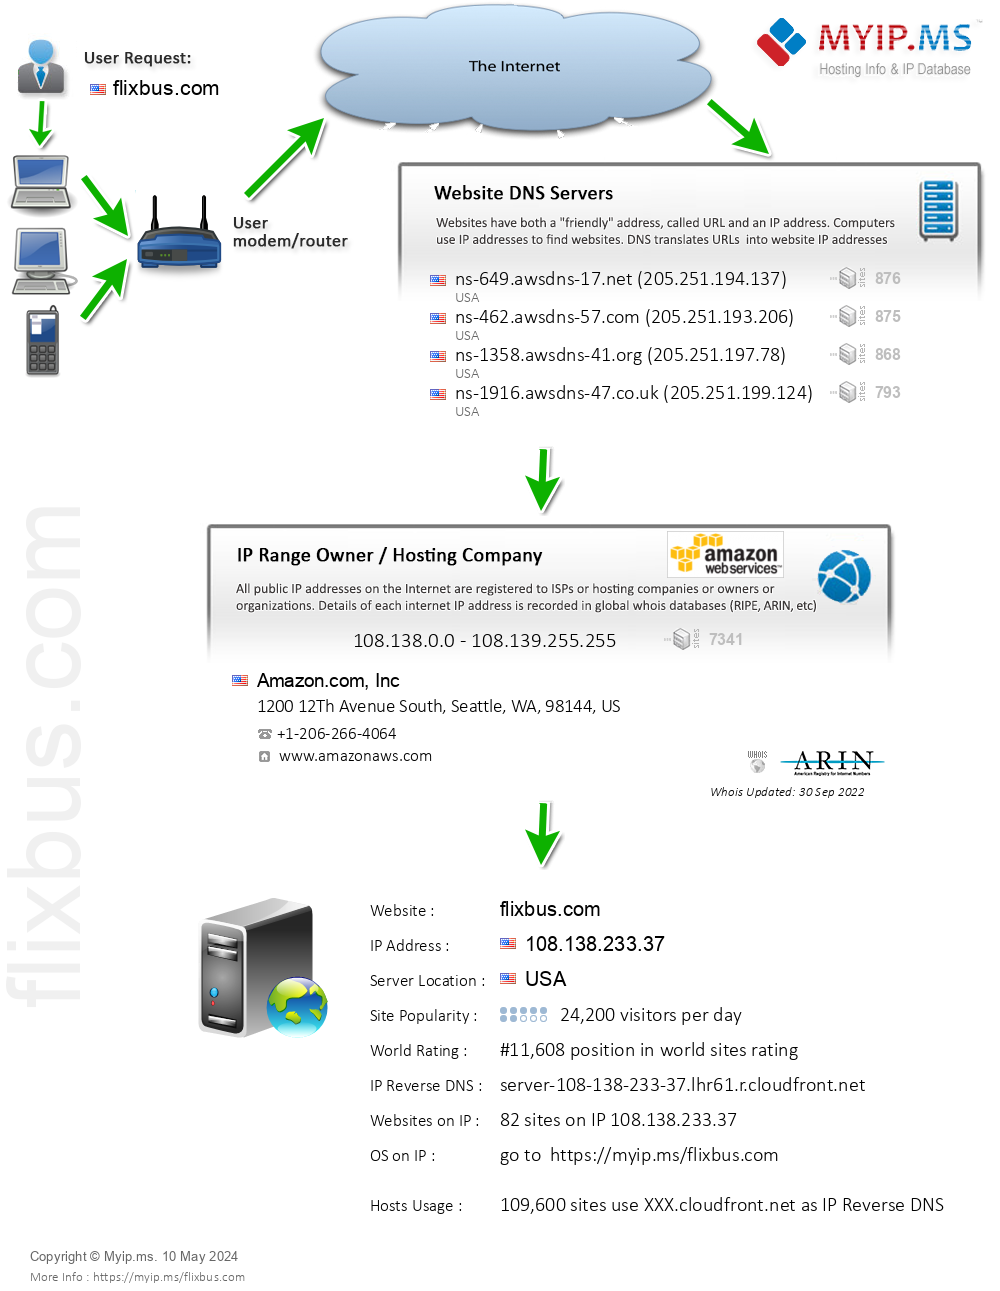 Flixbus.com - Website Hosting Visual IP Diagram